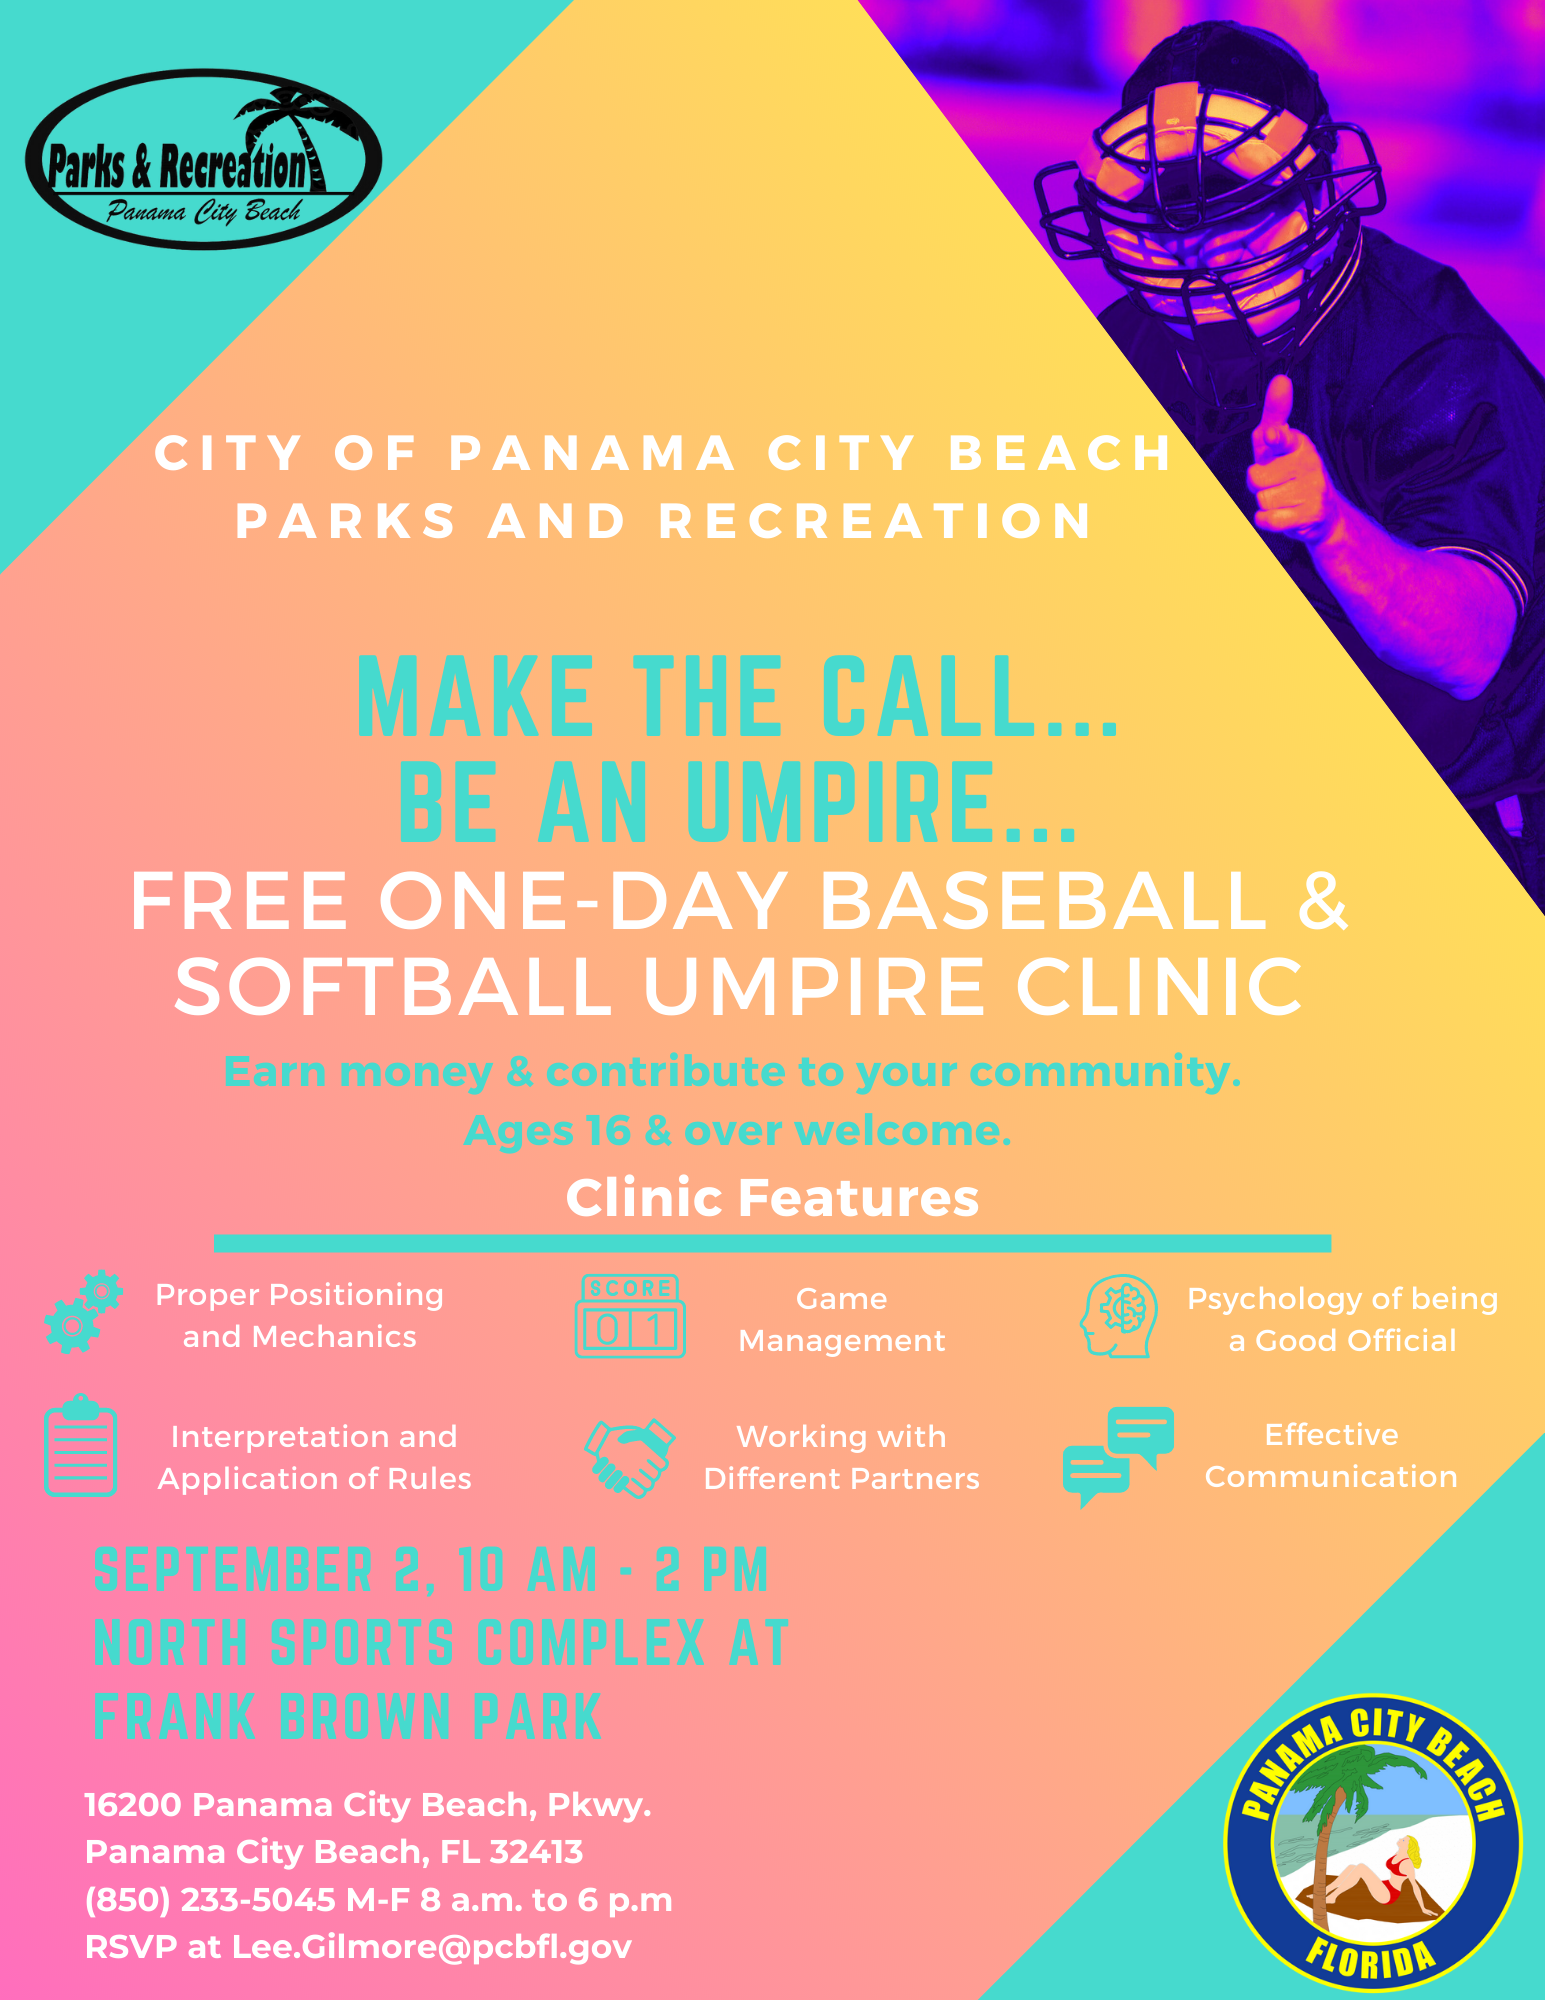 Baseball & Softball umpire clinic